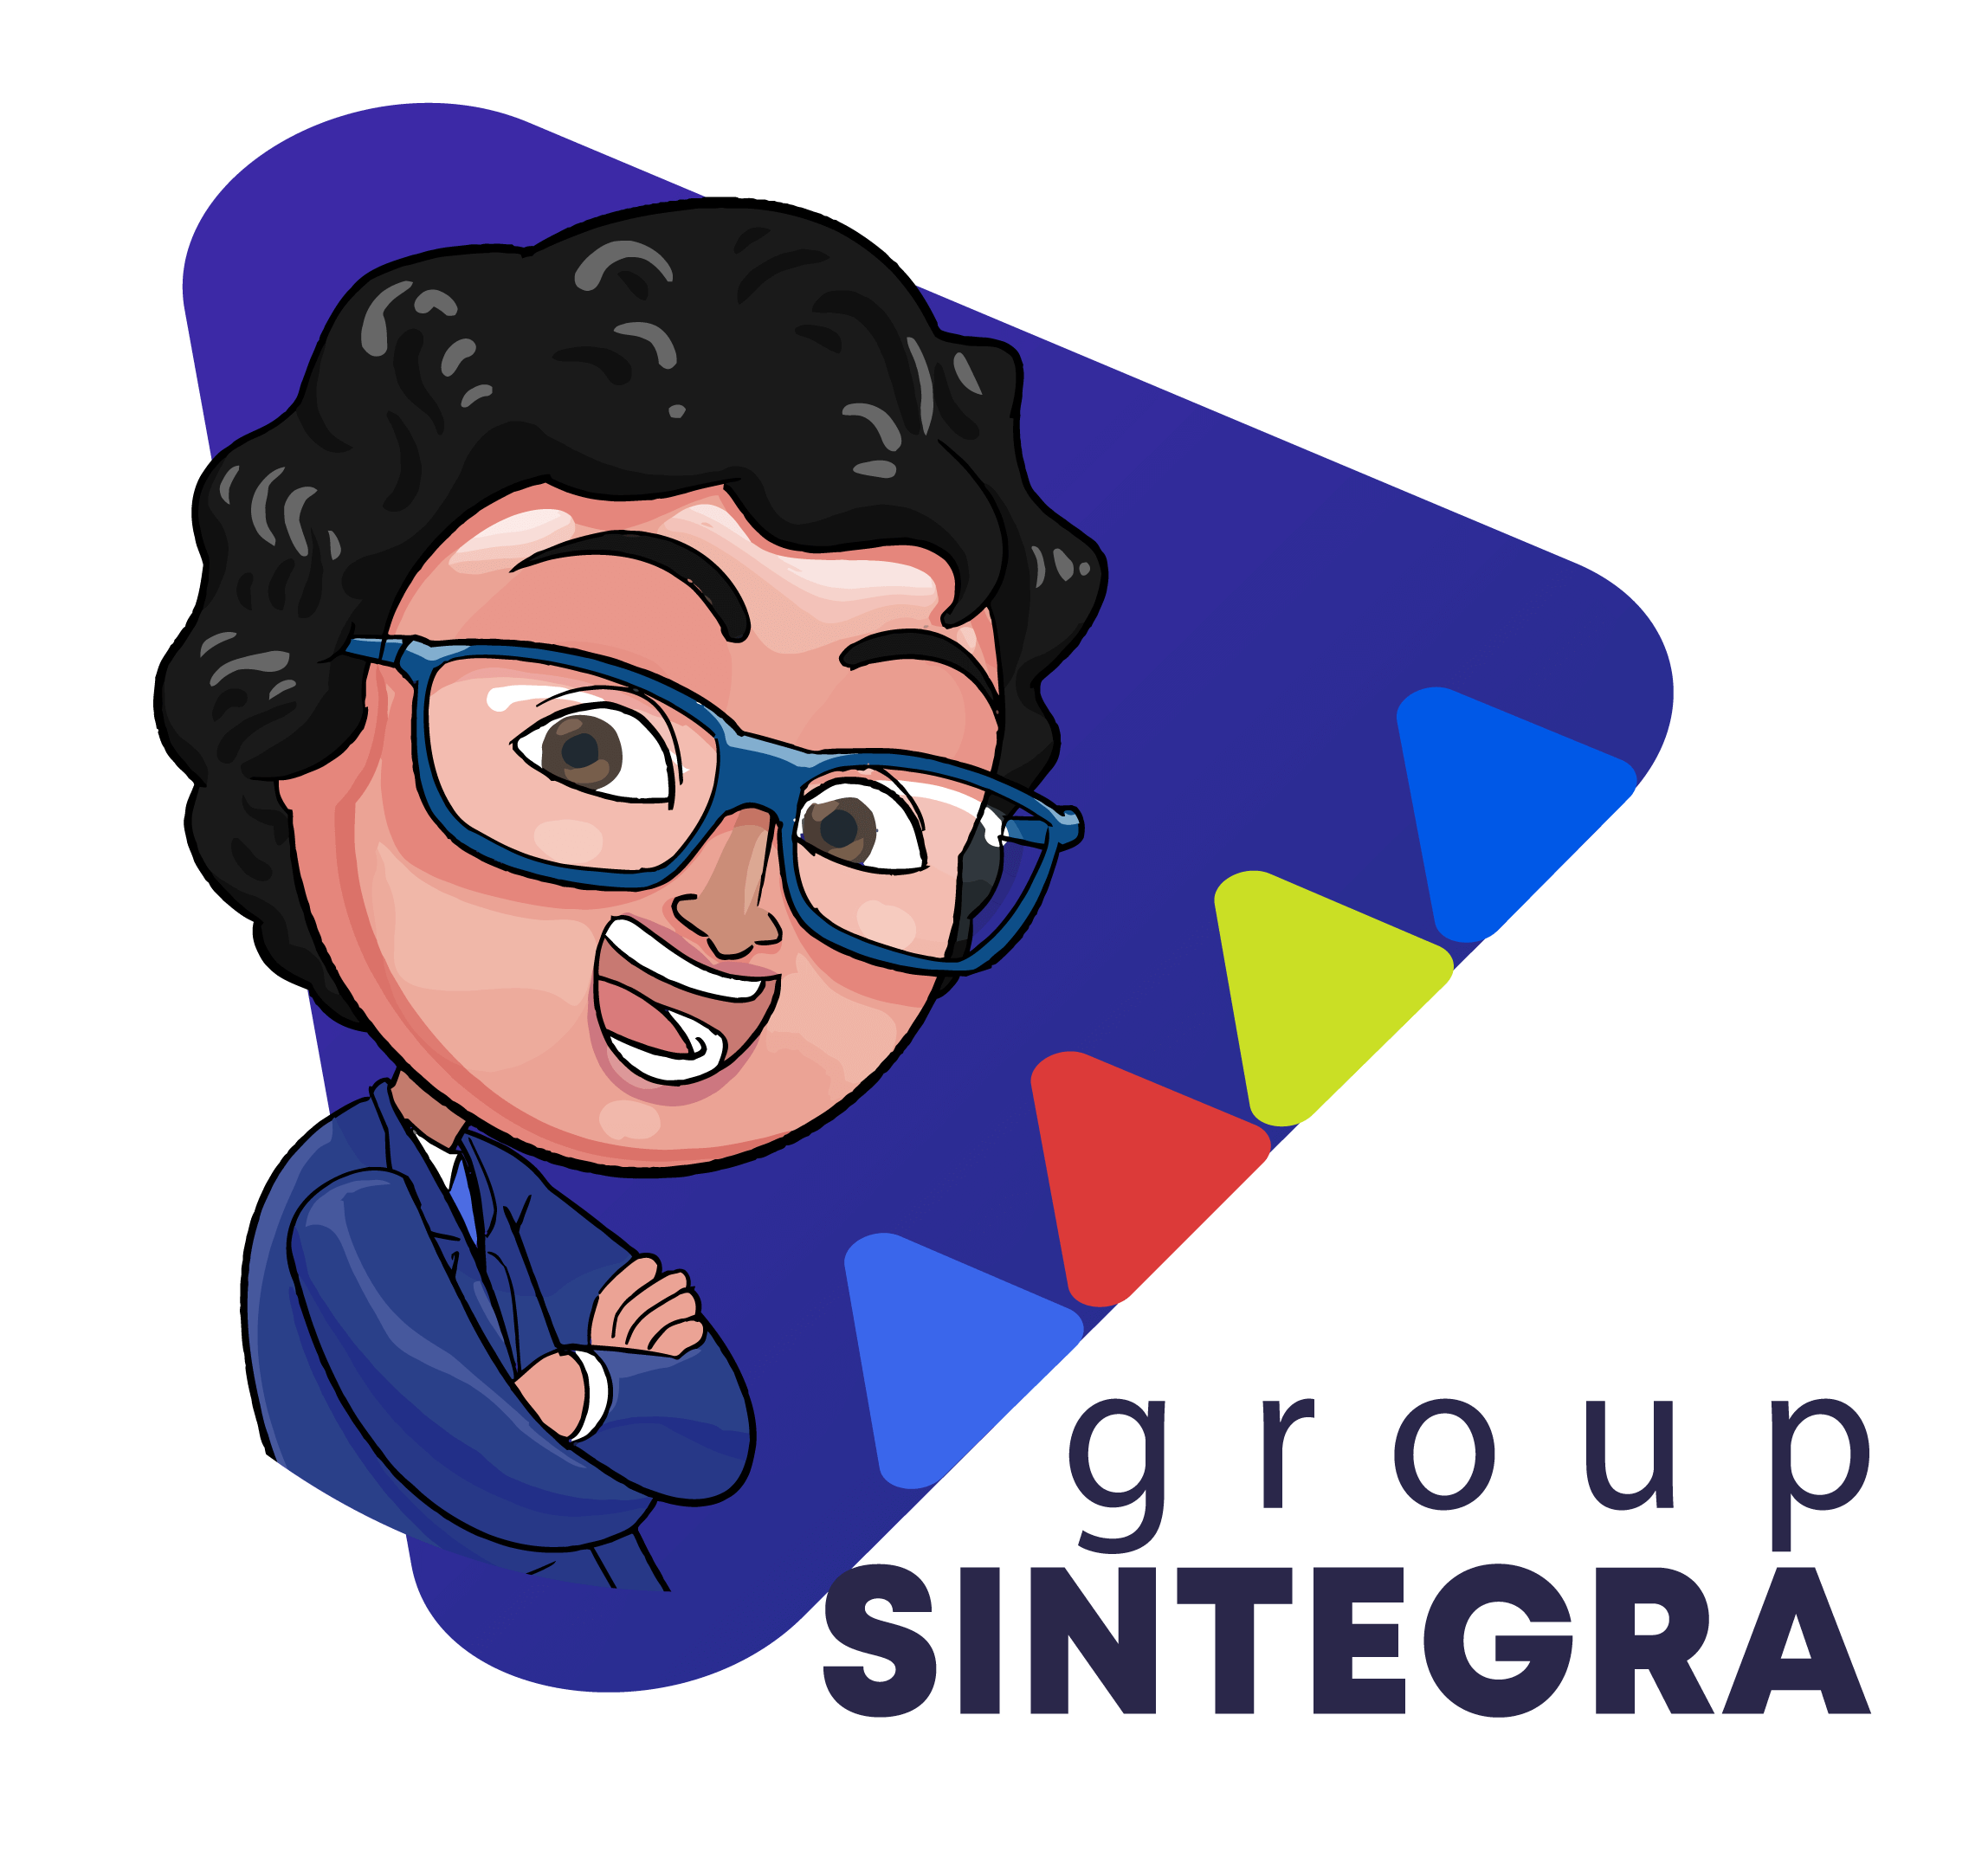 Sintegra Group